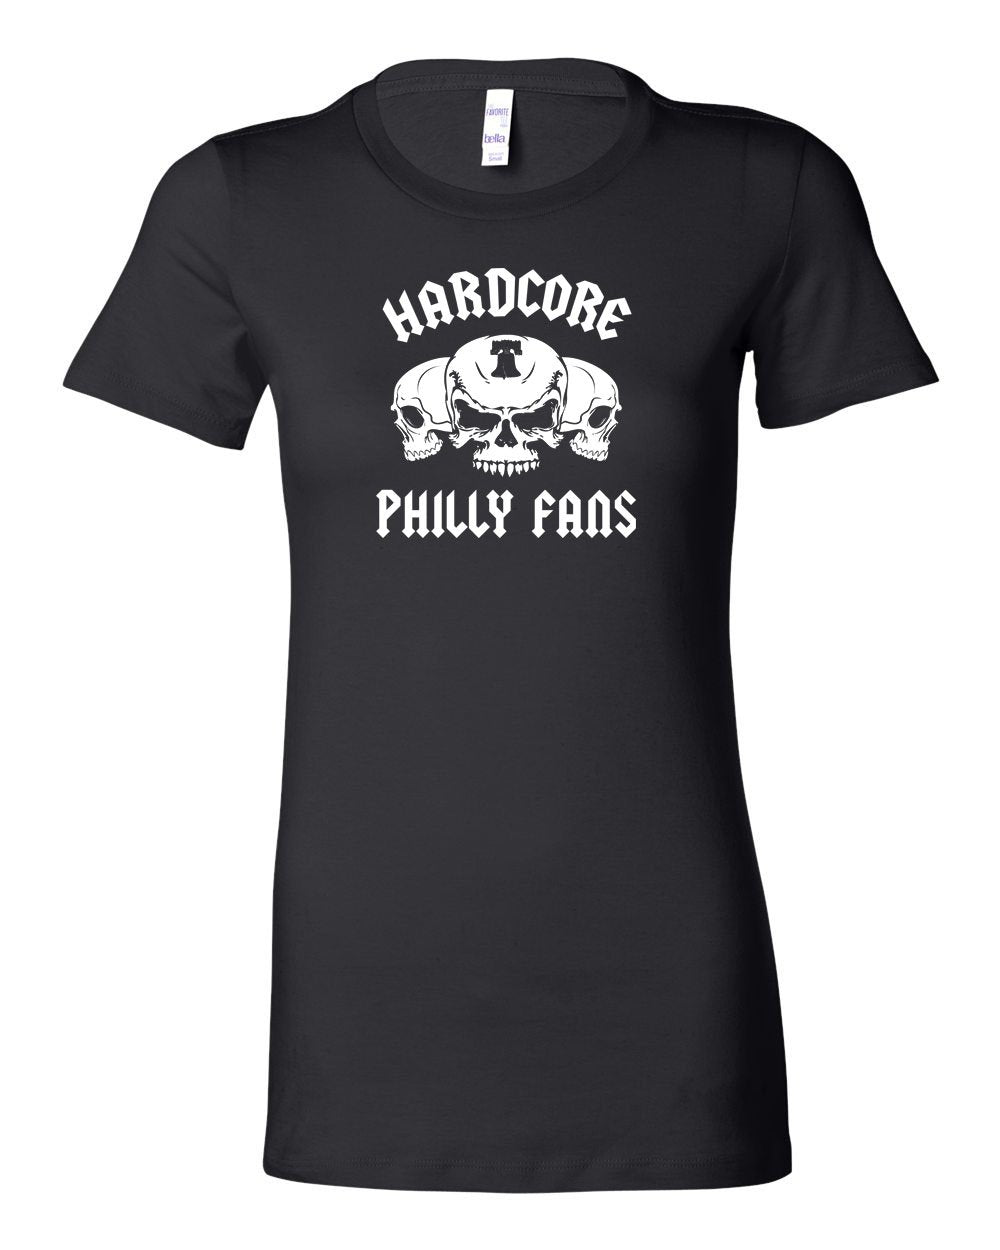 Hardcore Philly Fans LADIES Junior-Fit T-Shirt